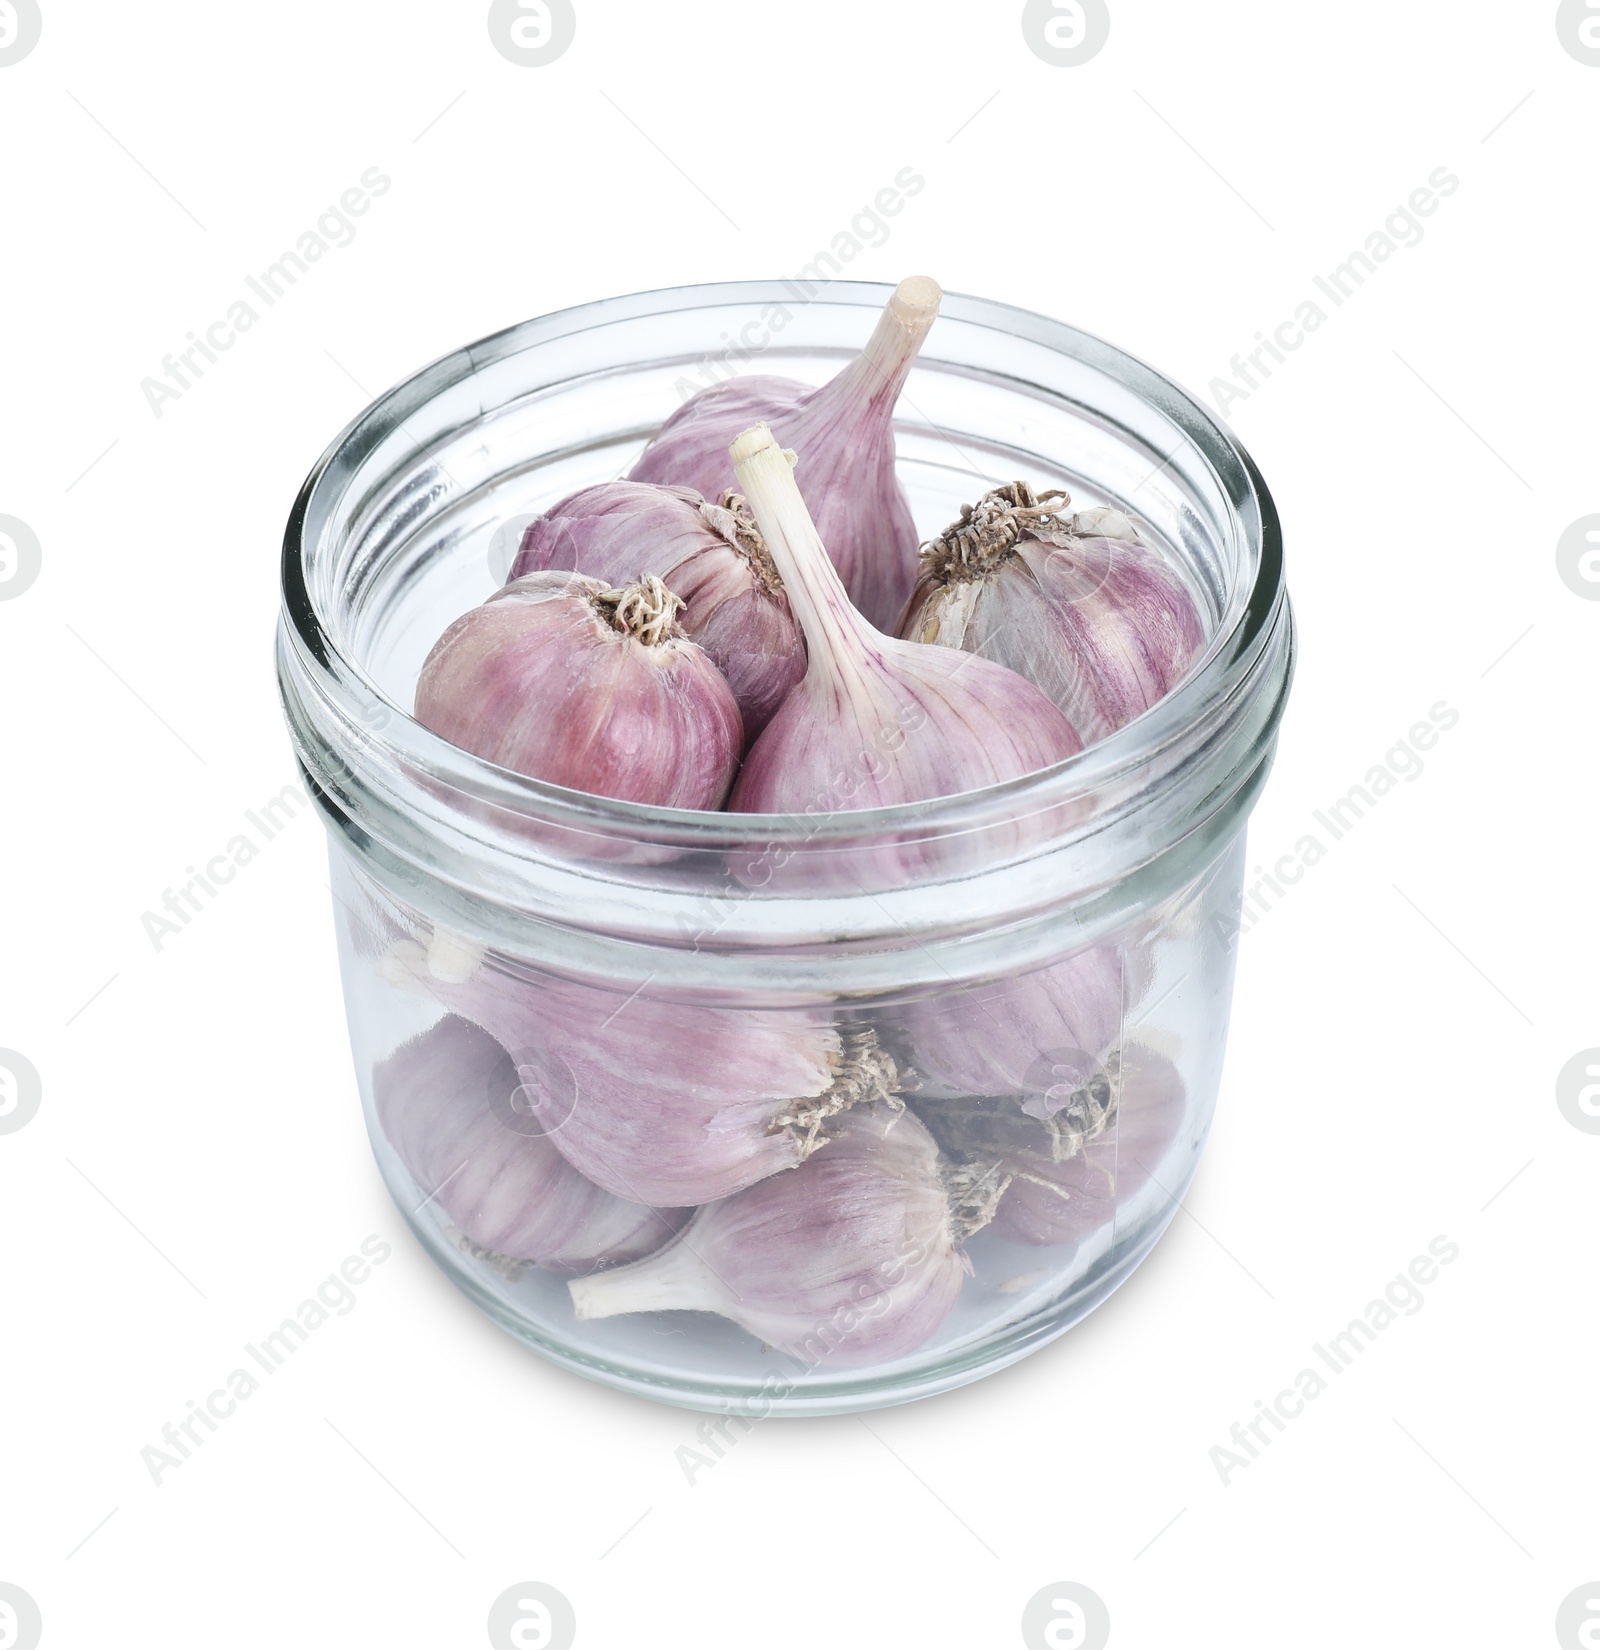 Photo of Fresh garlic bulbs in glass jar isolated on white